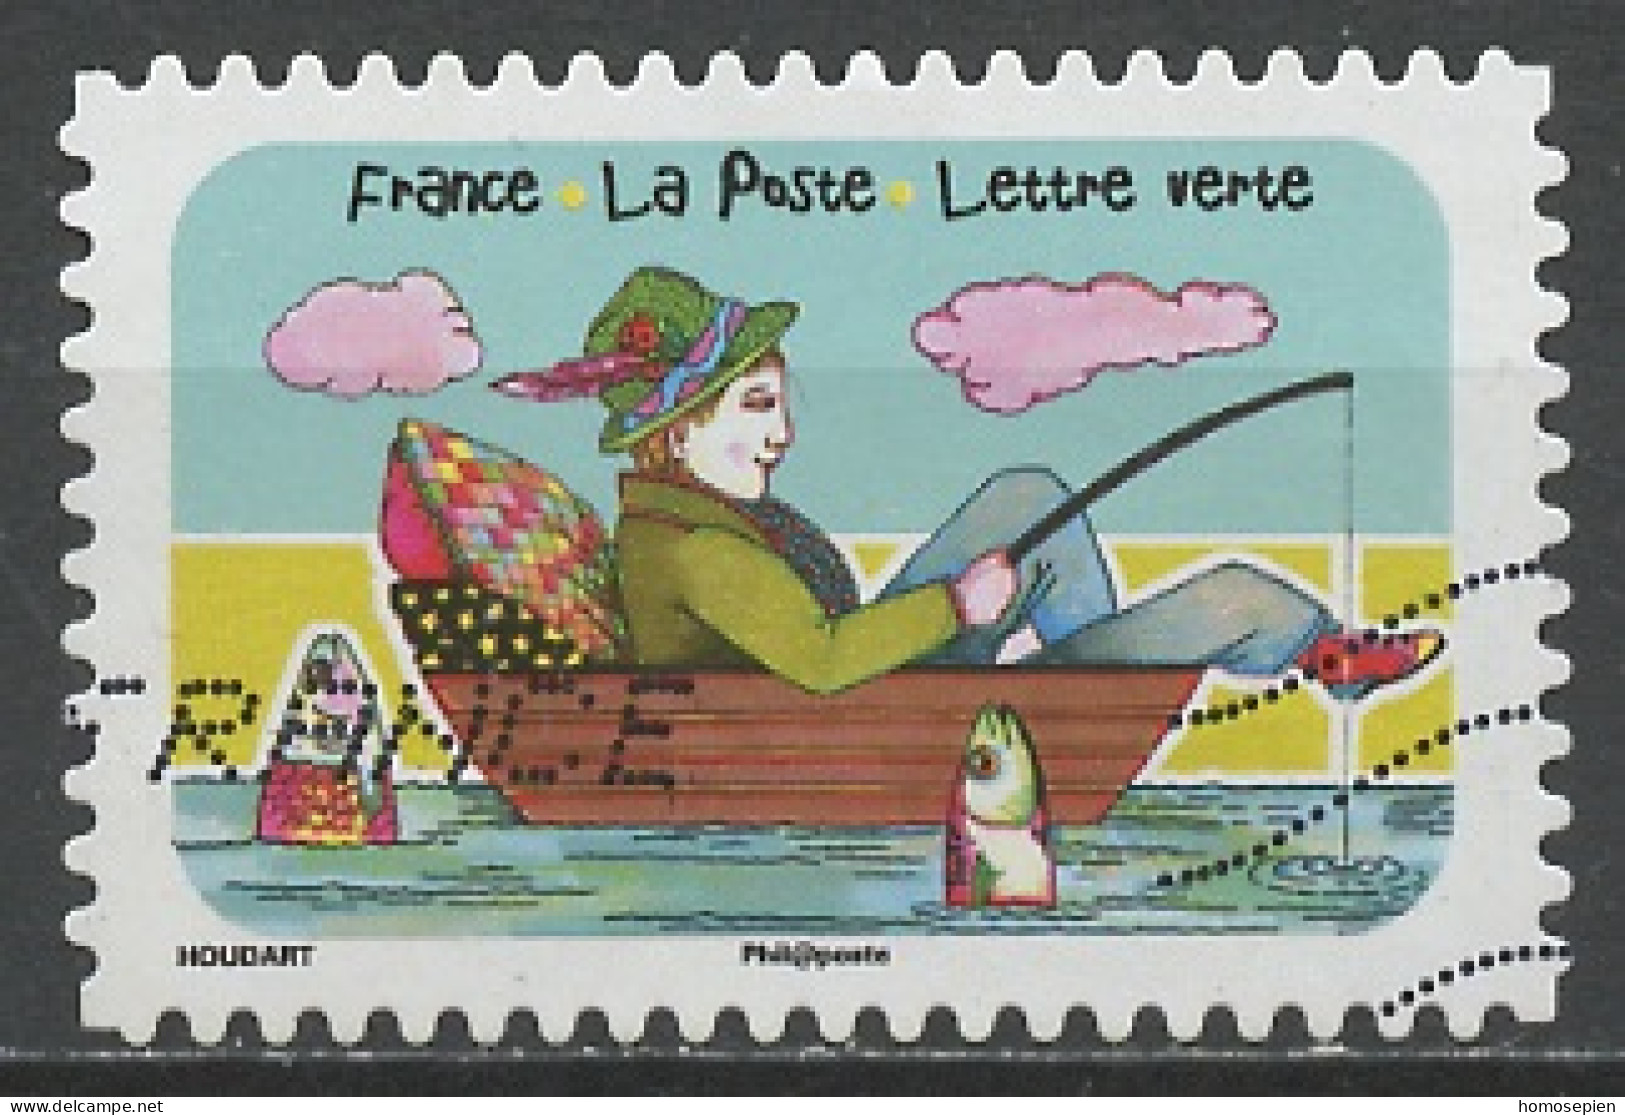 France - Frankreich Adhésif 2020 Y&T N°AD1882 - Michel N°SK7624 (o) - (svi) Pêche à La Ligne - Used Stamps